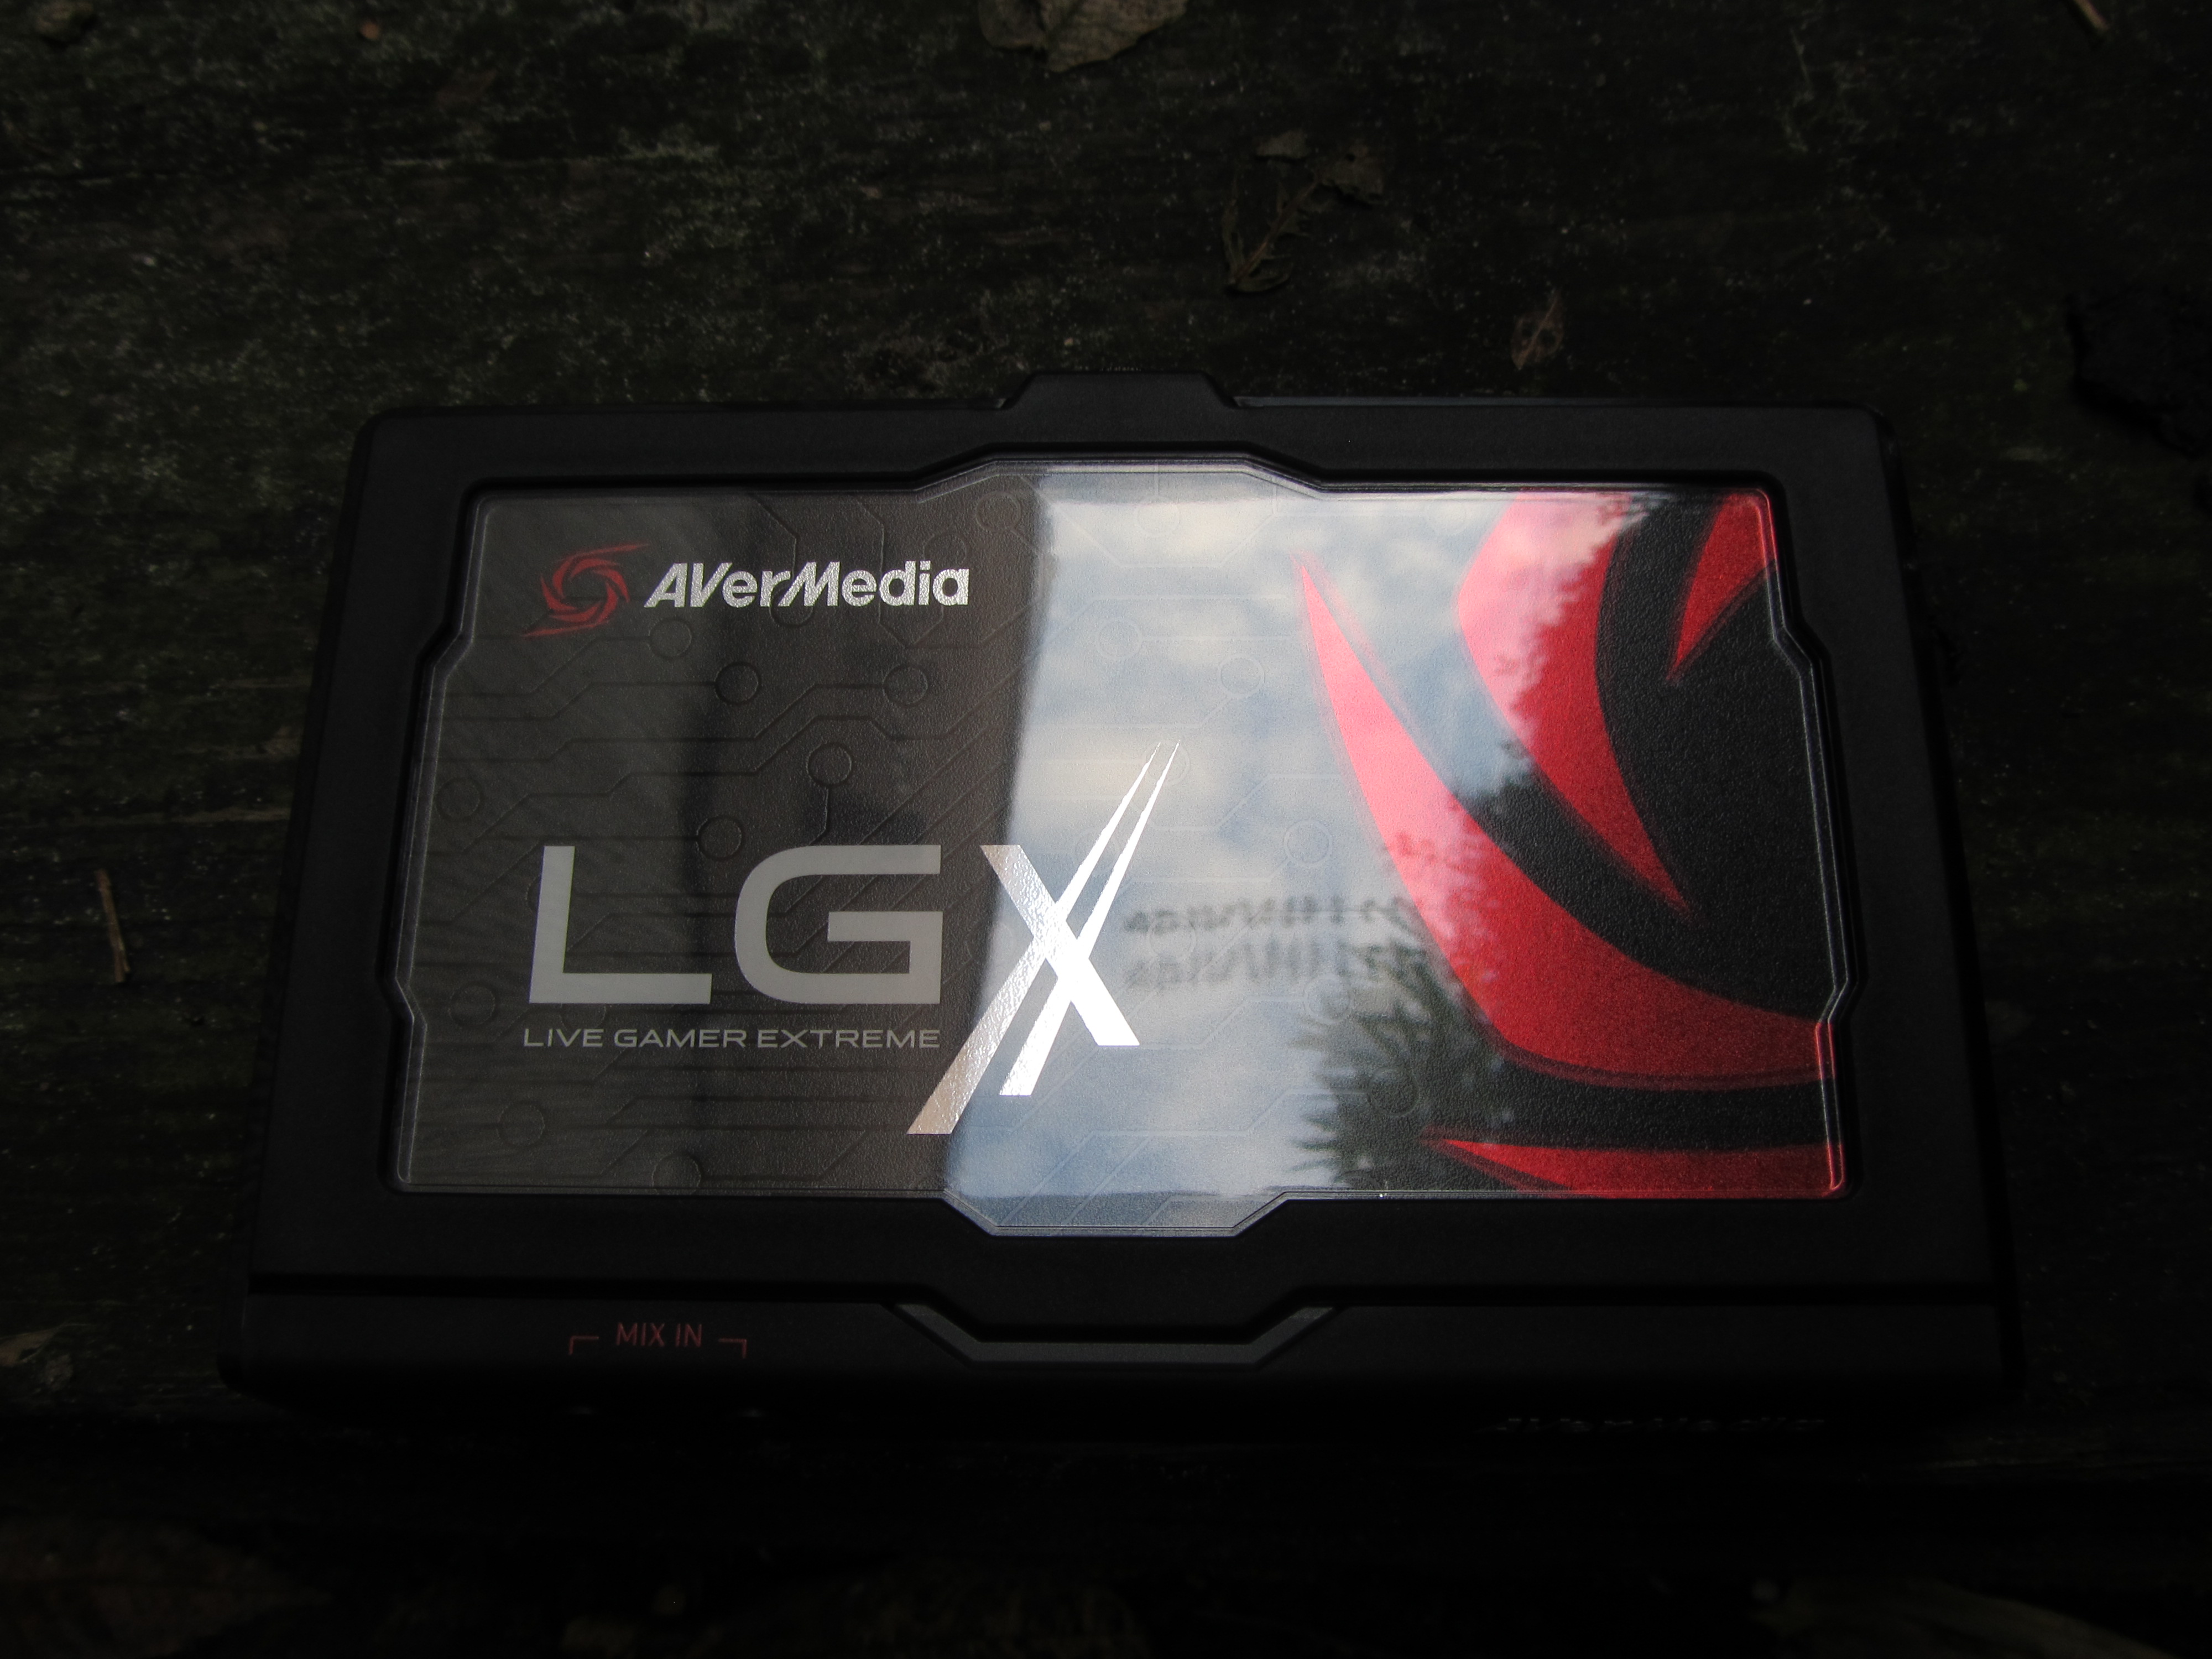 AverMedia Live Gamer Extreme LGX (GC550) productervaring door pclinde